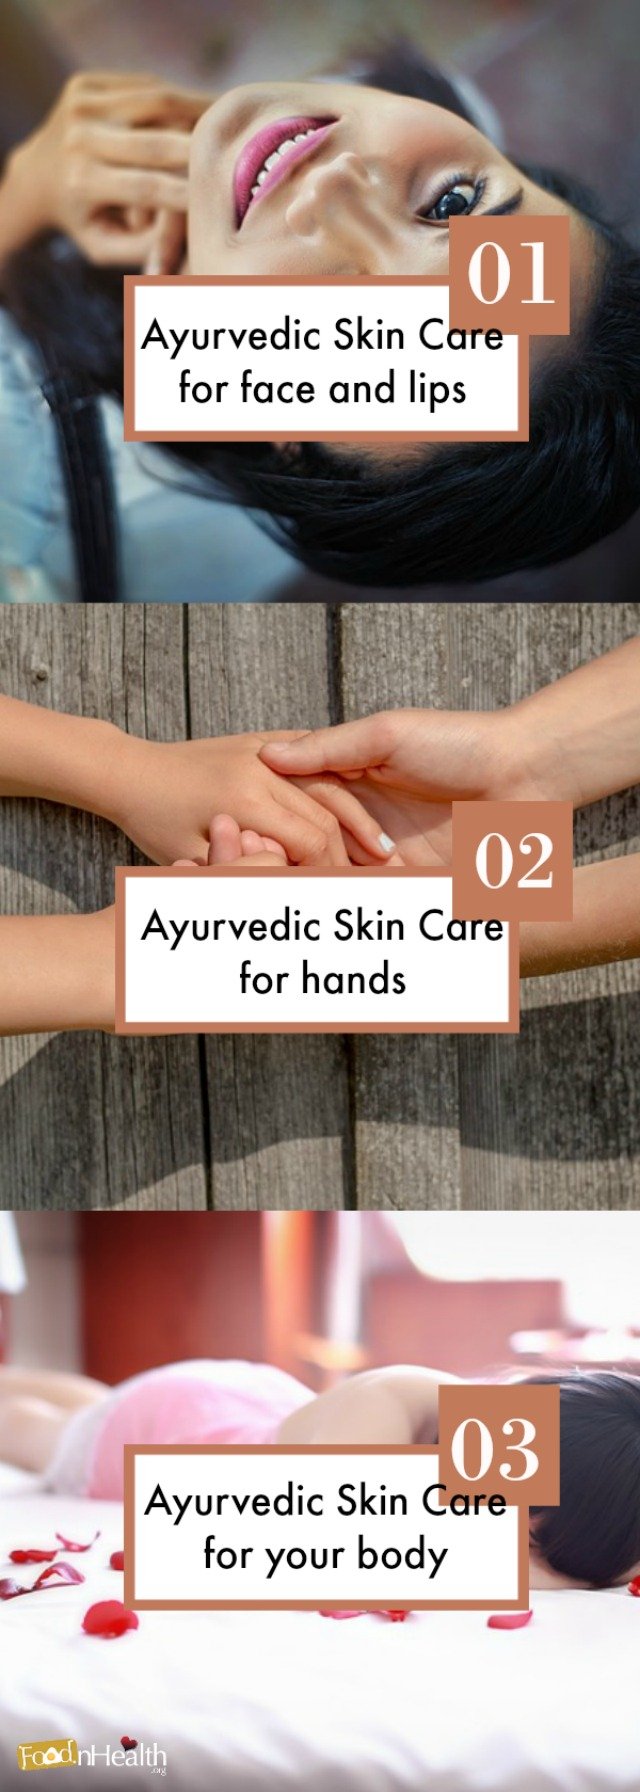 Ayurvedic Skin Care Tips for Healthy & Glowing Skin